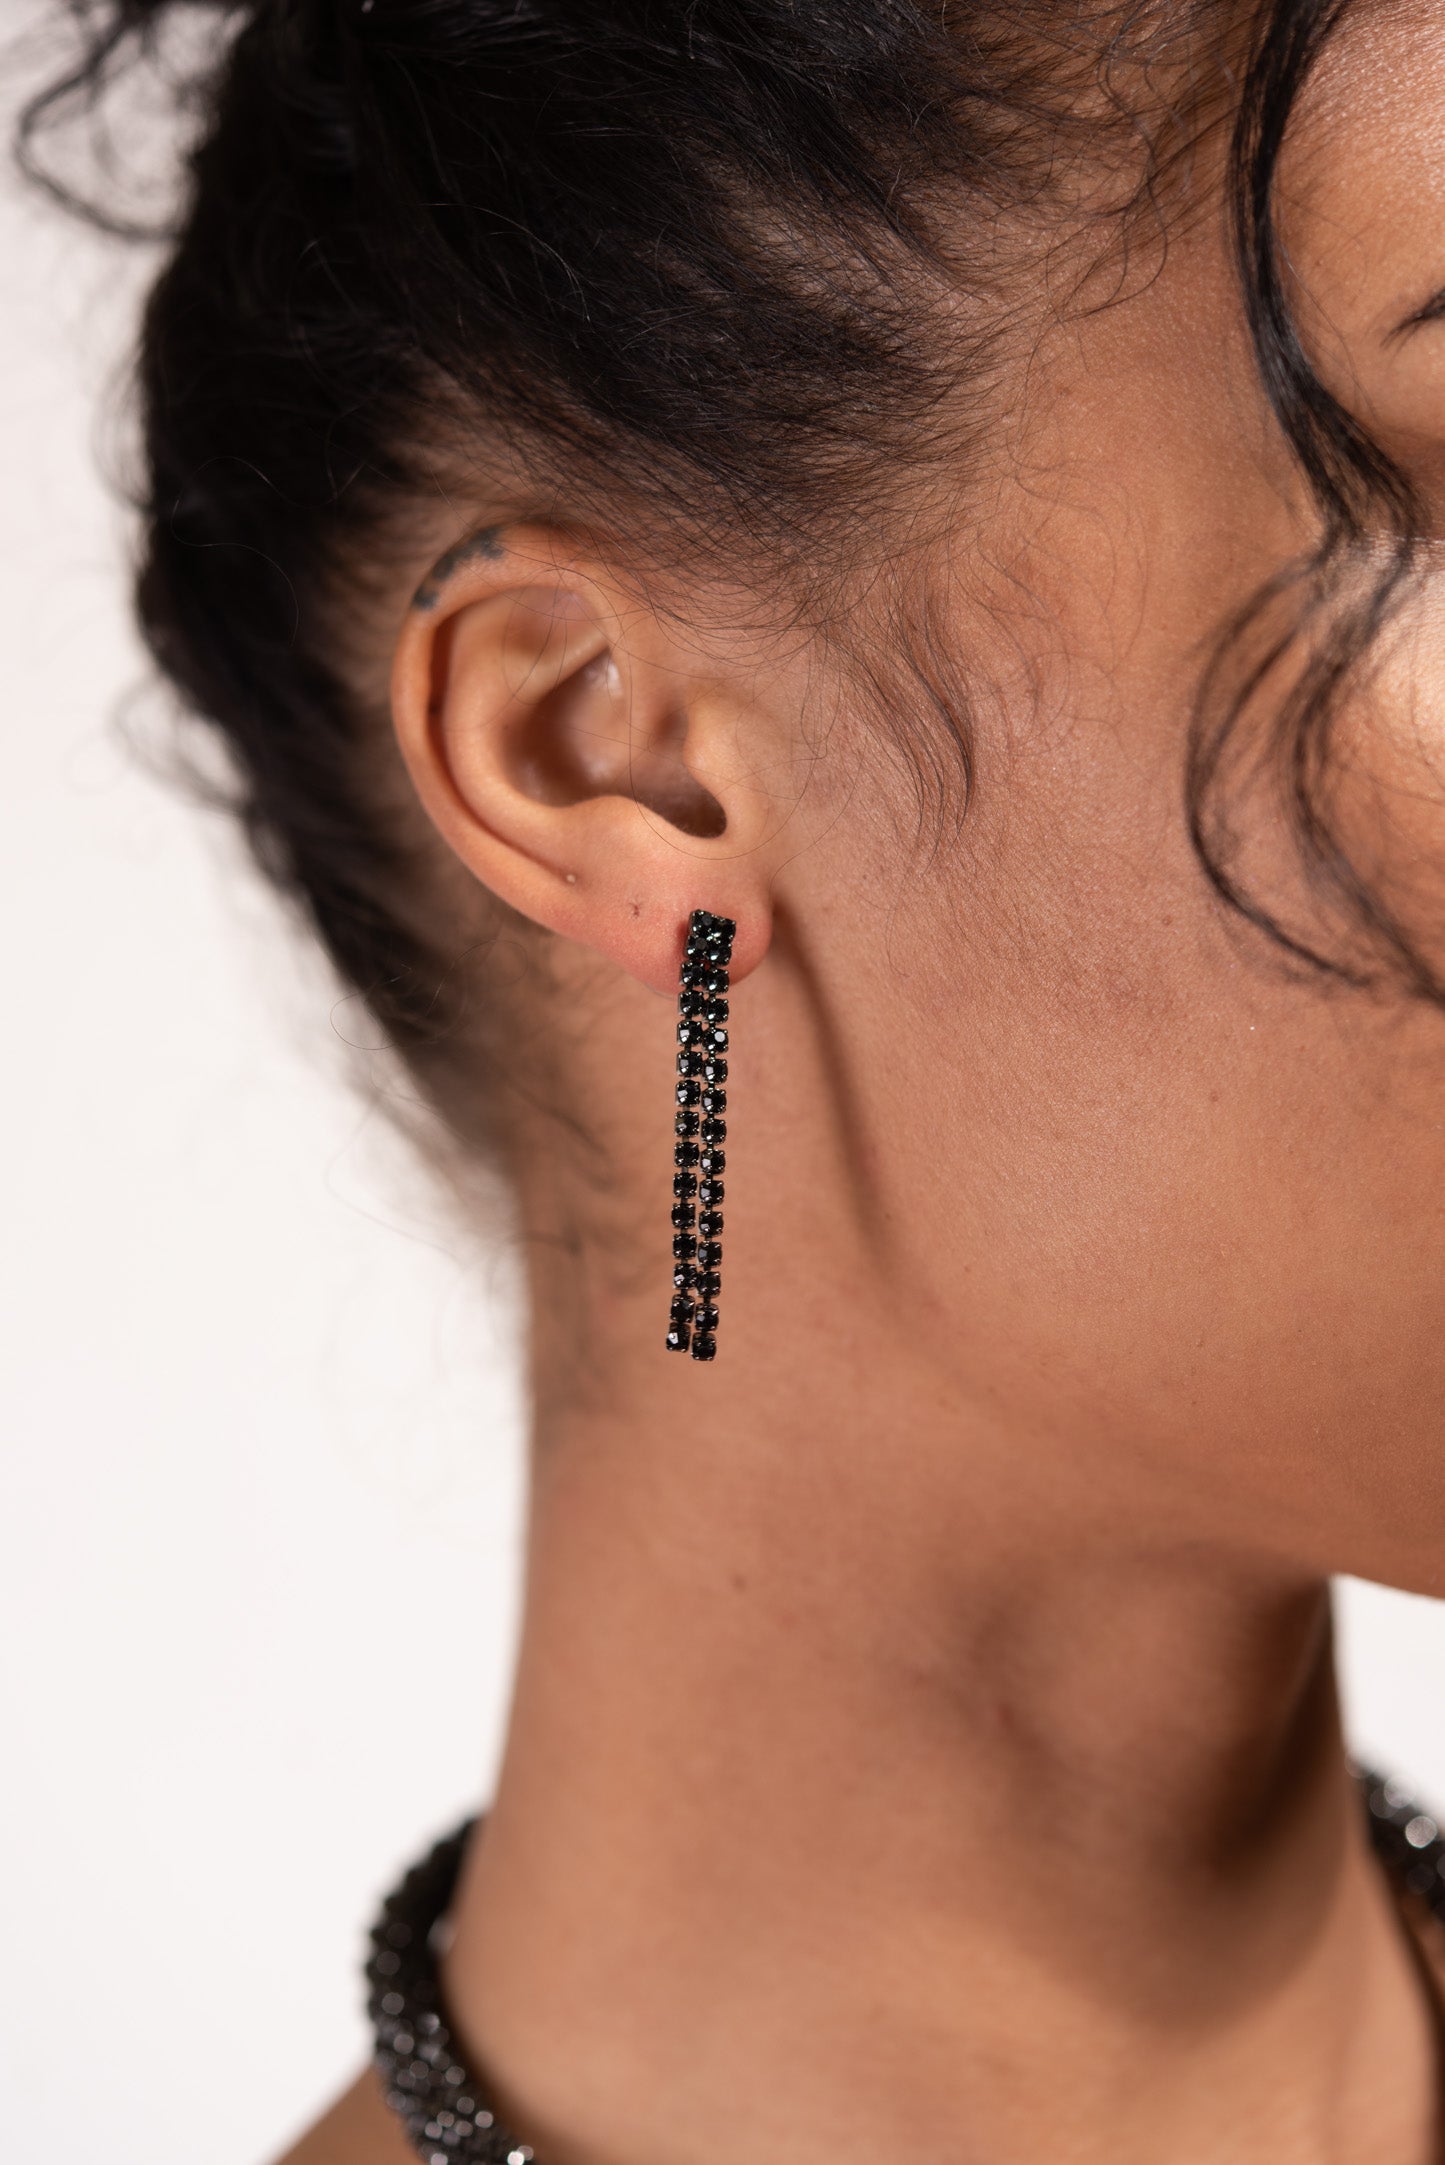 Iris Rhinestone Necklace and Earring Set - Black